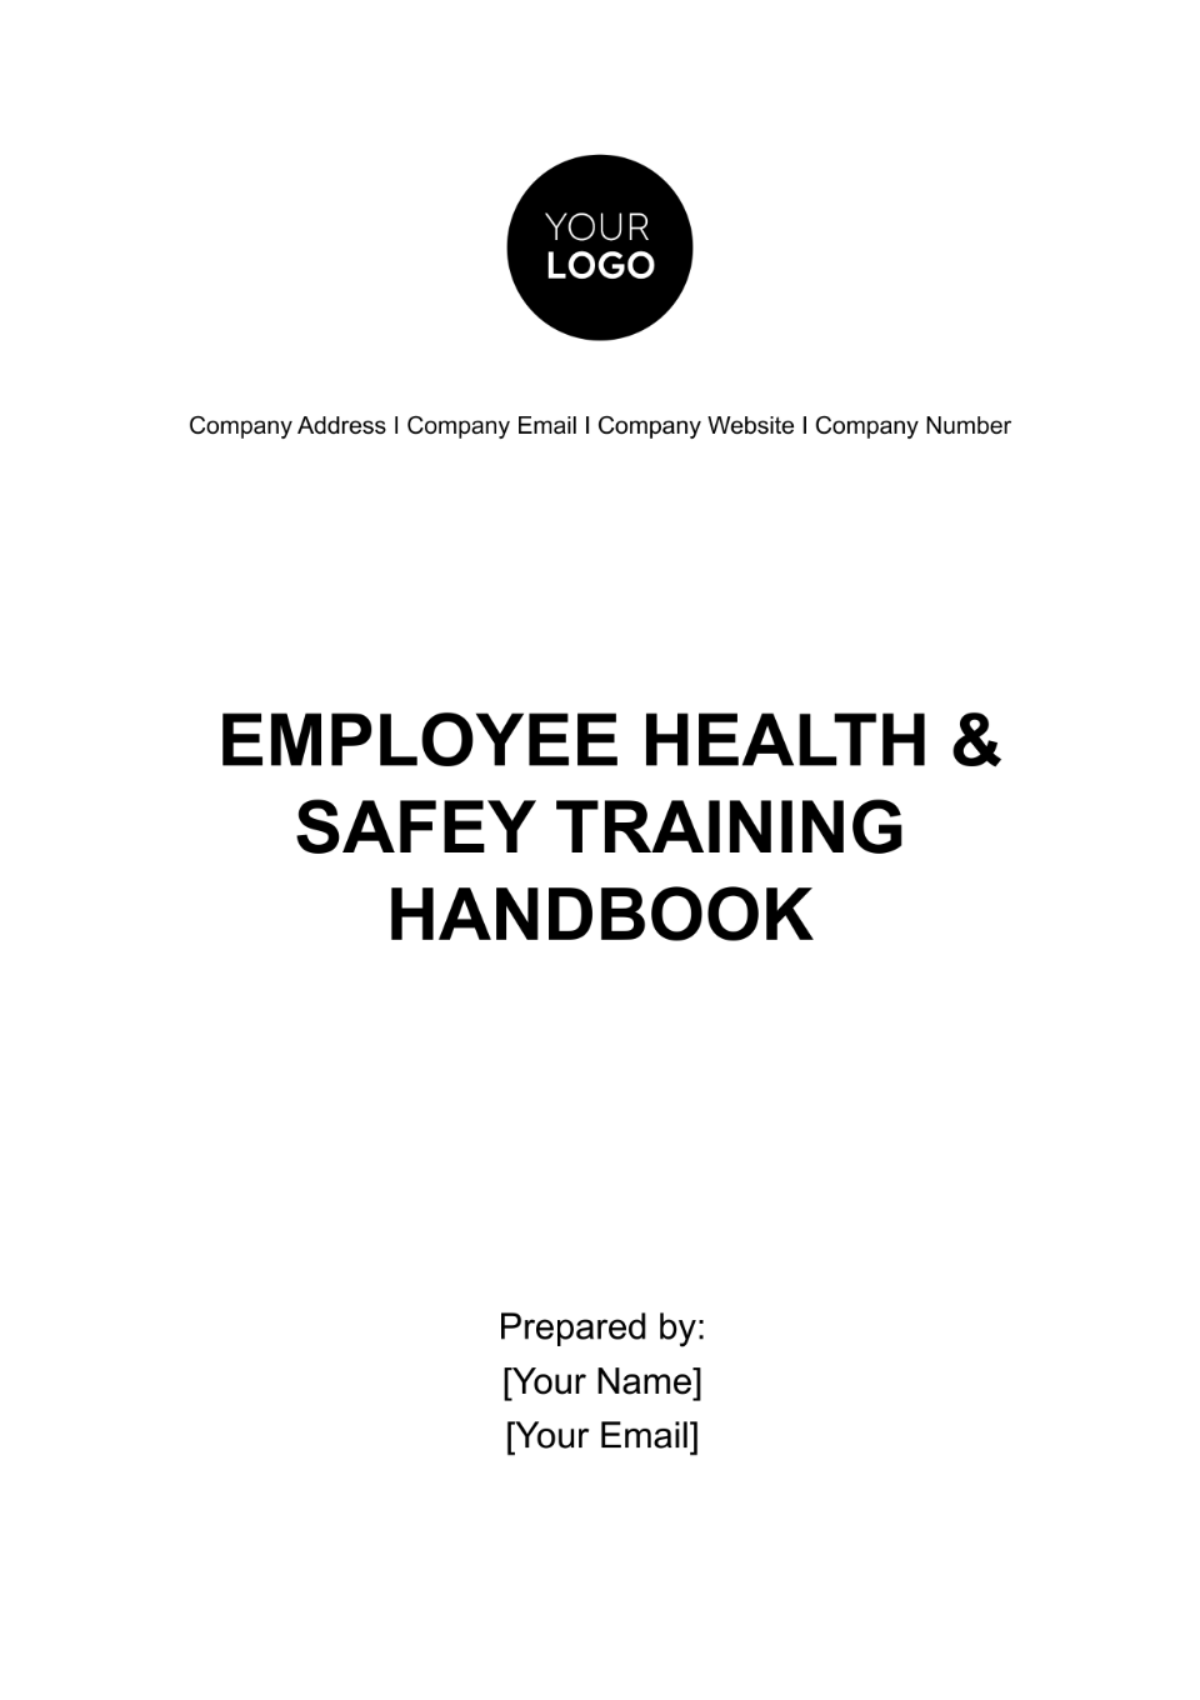 Employee Health & Safety Training Handbook Template